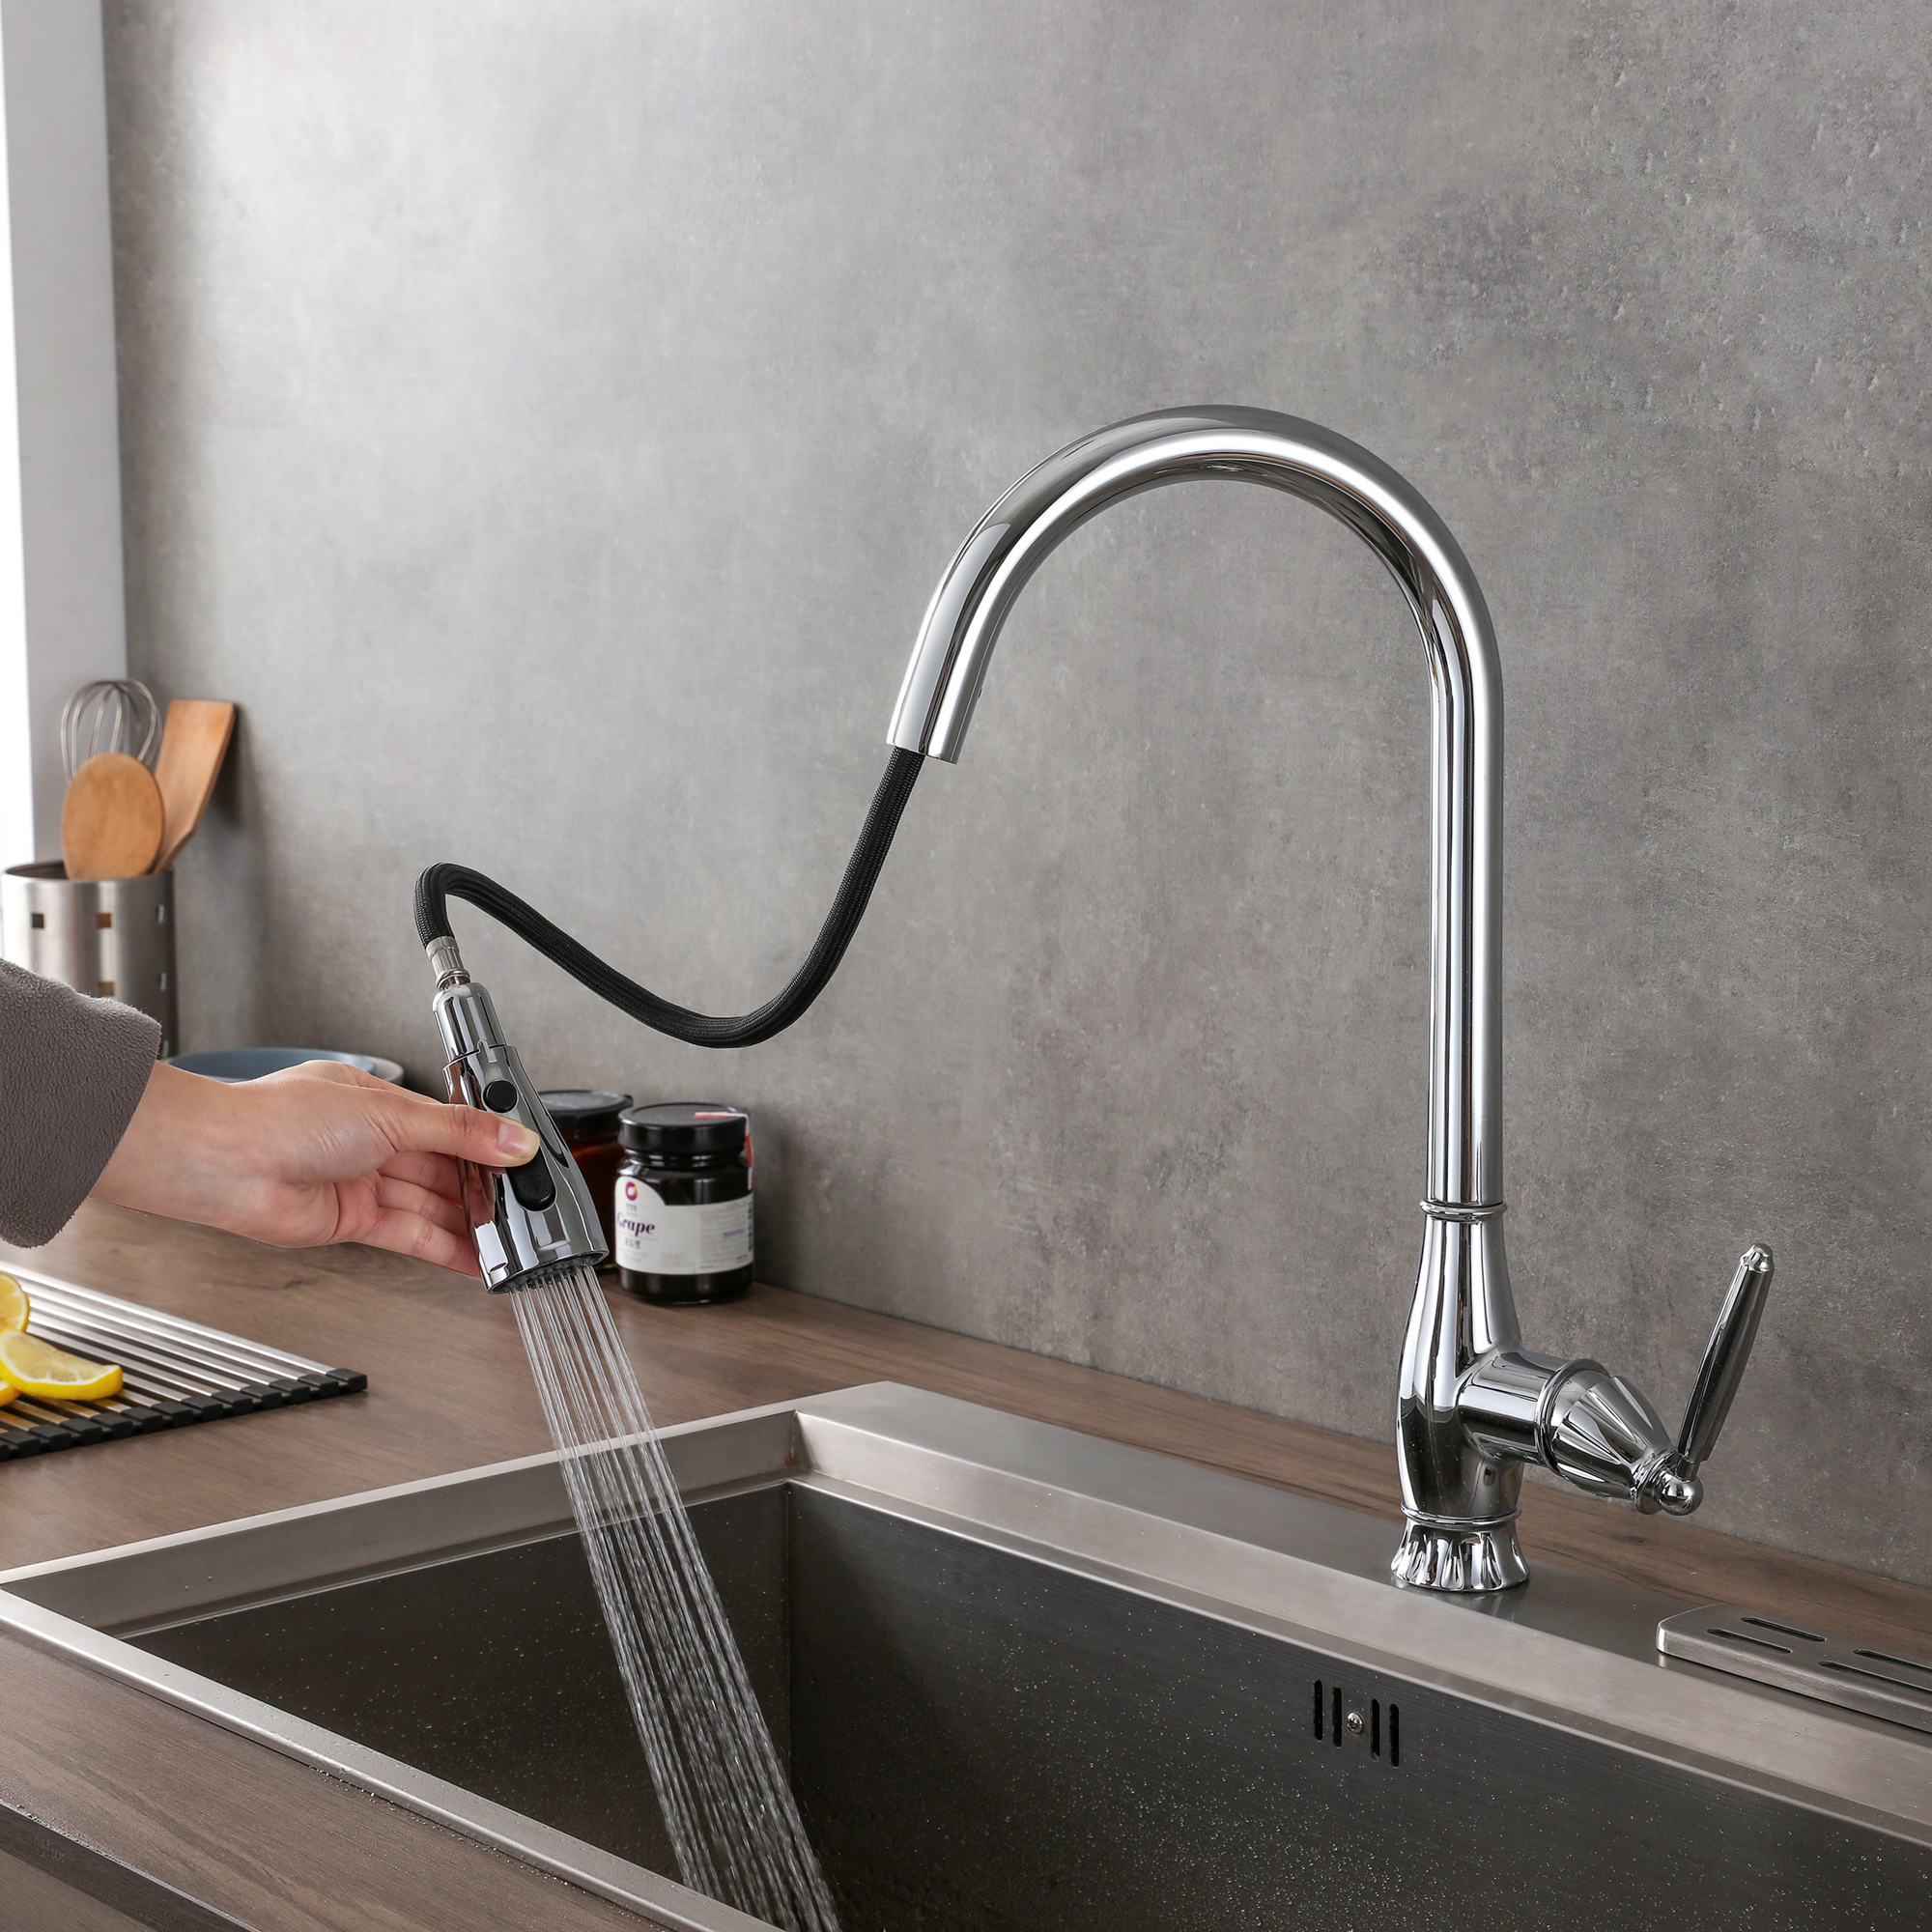 New Design Retro Chrome Swivel Pull Out Spray Kitchen Mixer Faucet